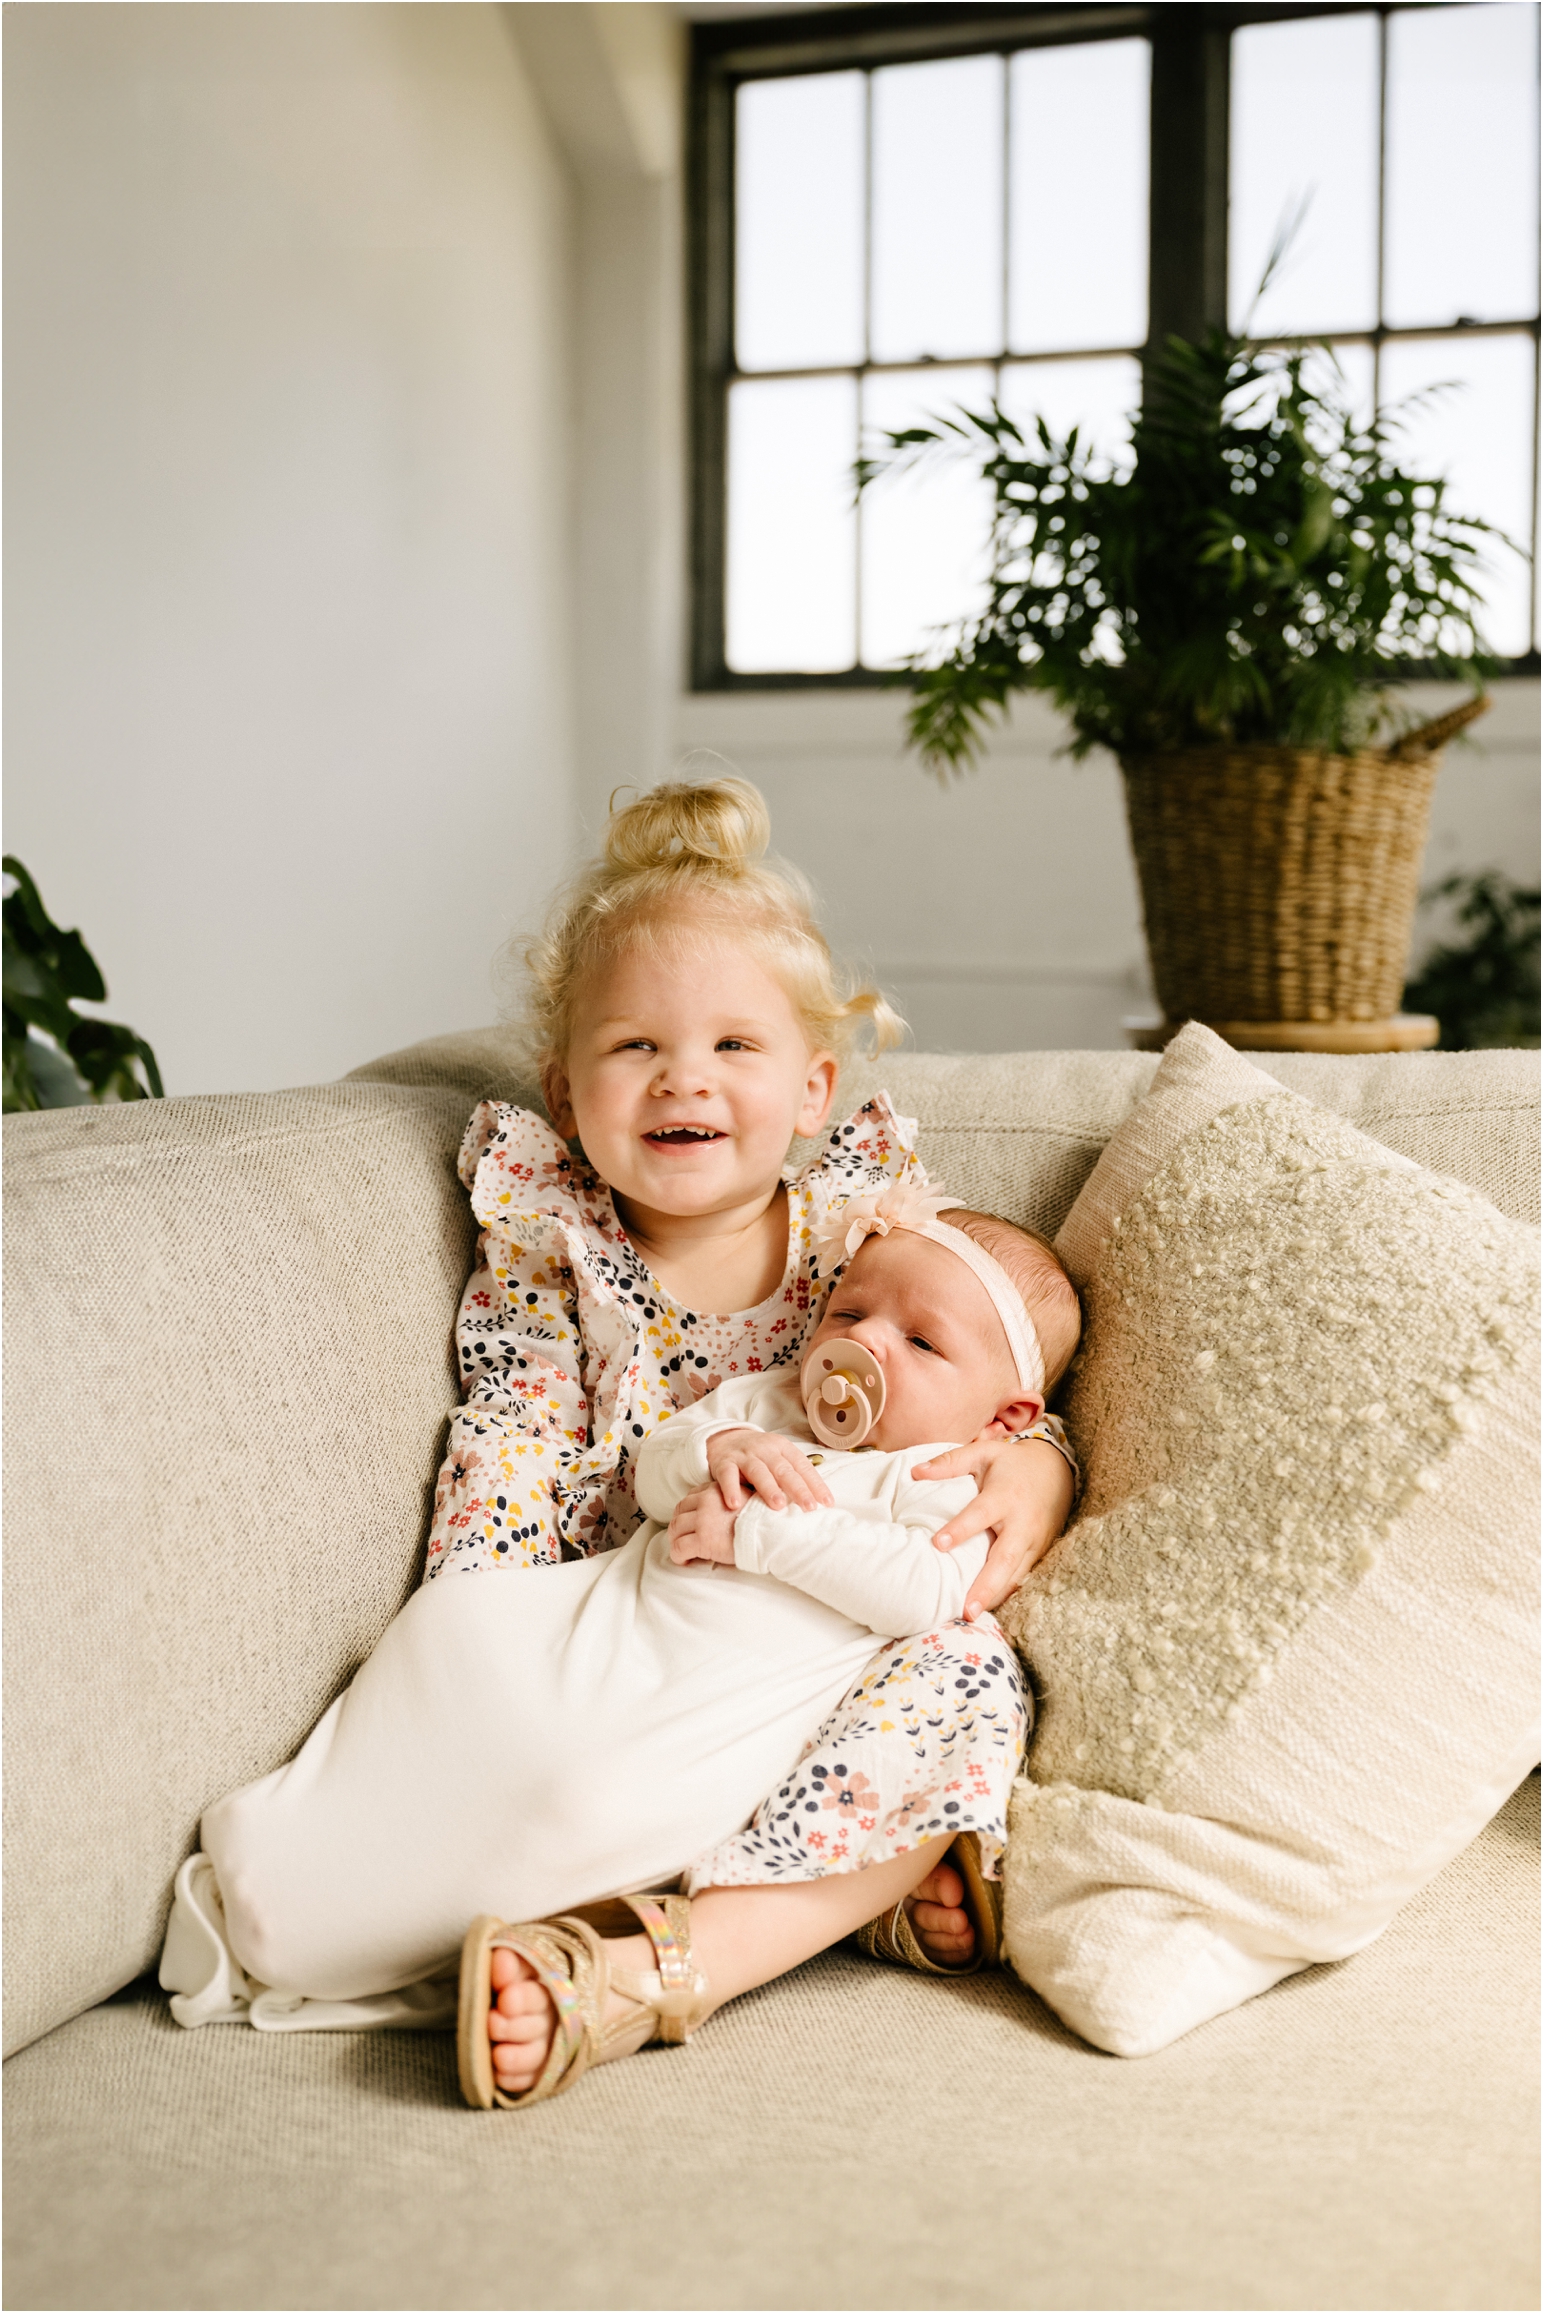 big sister holding infant baby sister